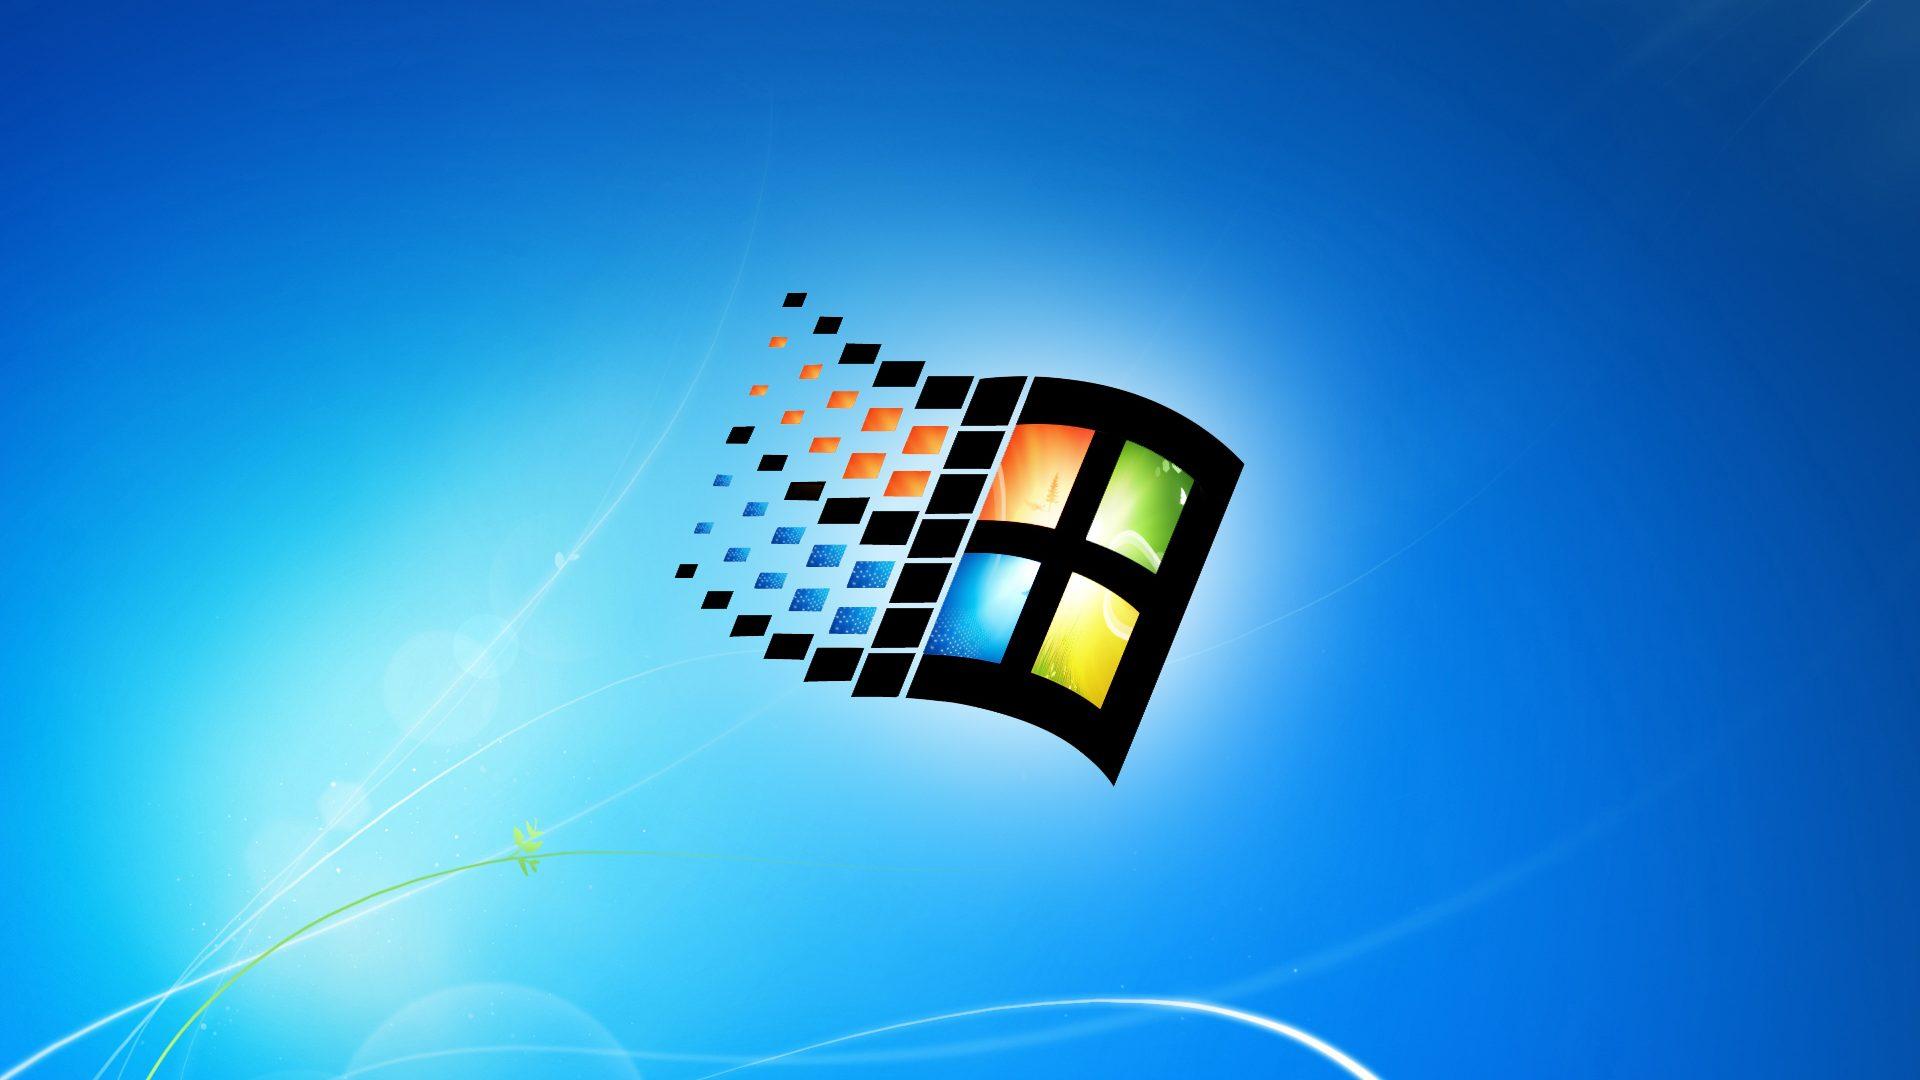 Windows 95 Logo - Classic Microsoft Windows 95 Logo Wallpaper